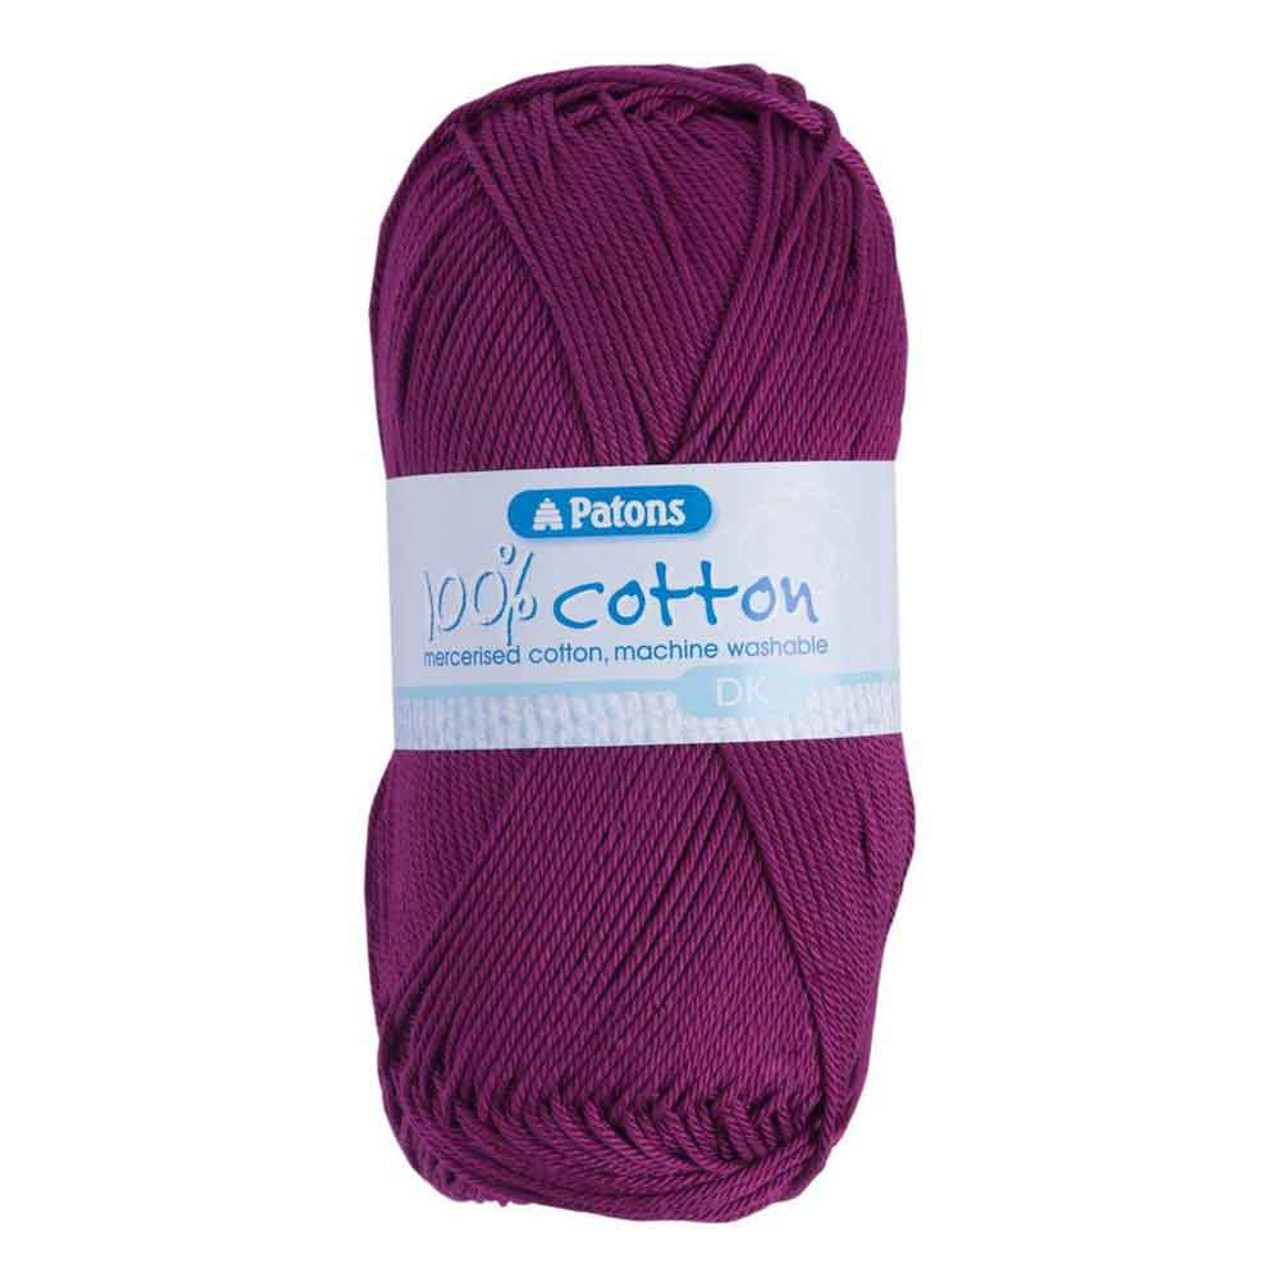 Patons 100% Cotton DK Yarn, 100g